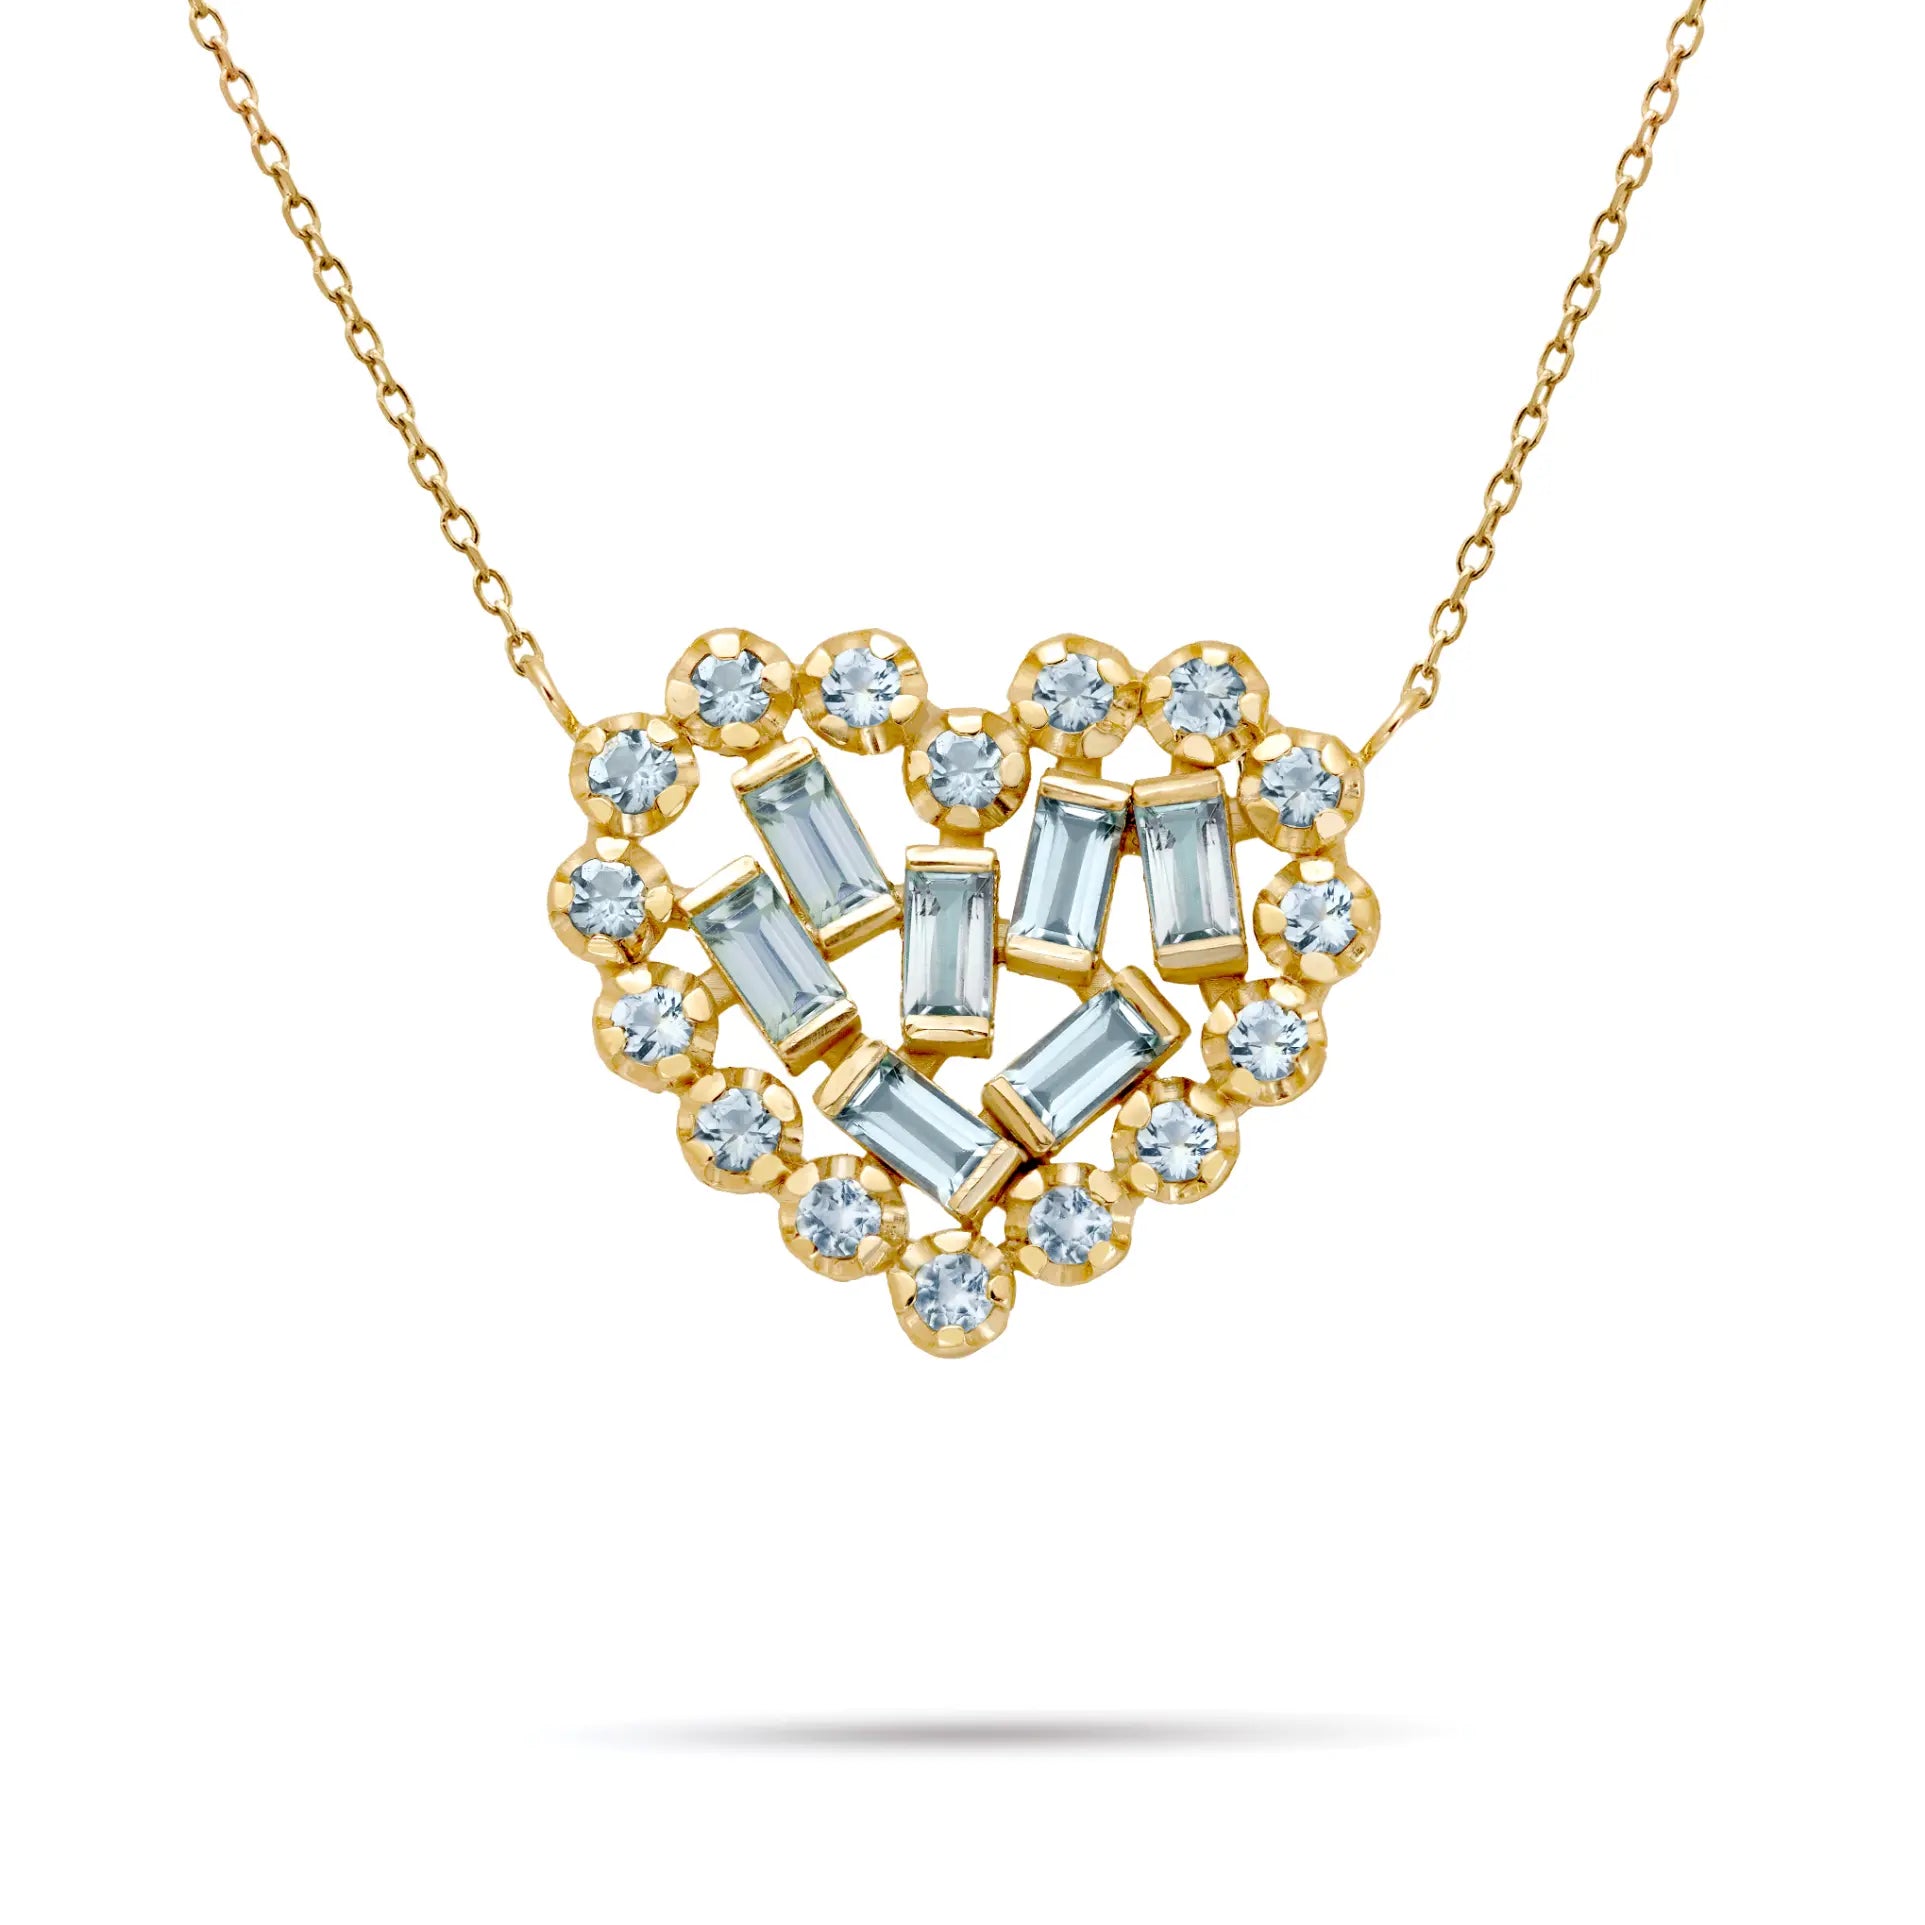 Swiss Blue Topaz Heart Necklace 14K Gold by Kyklos